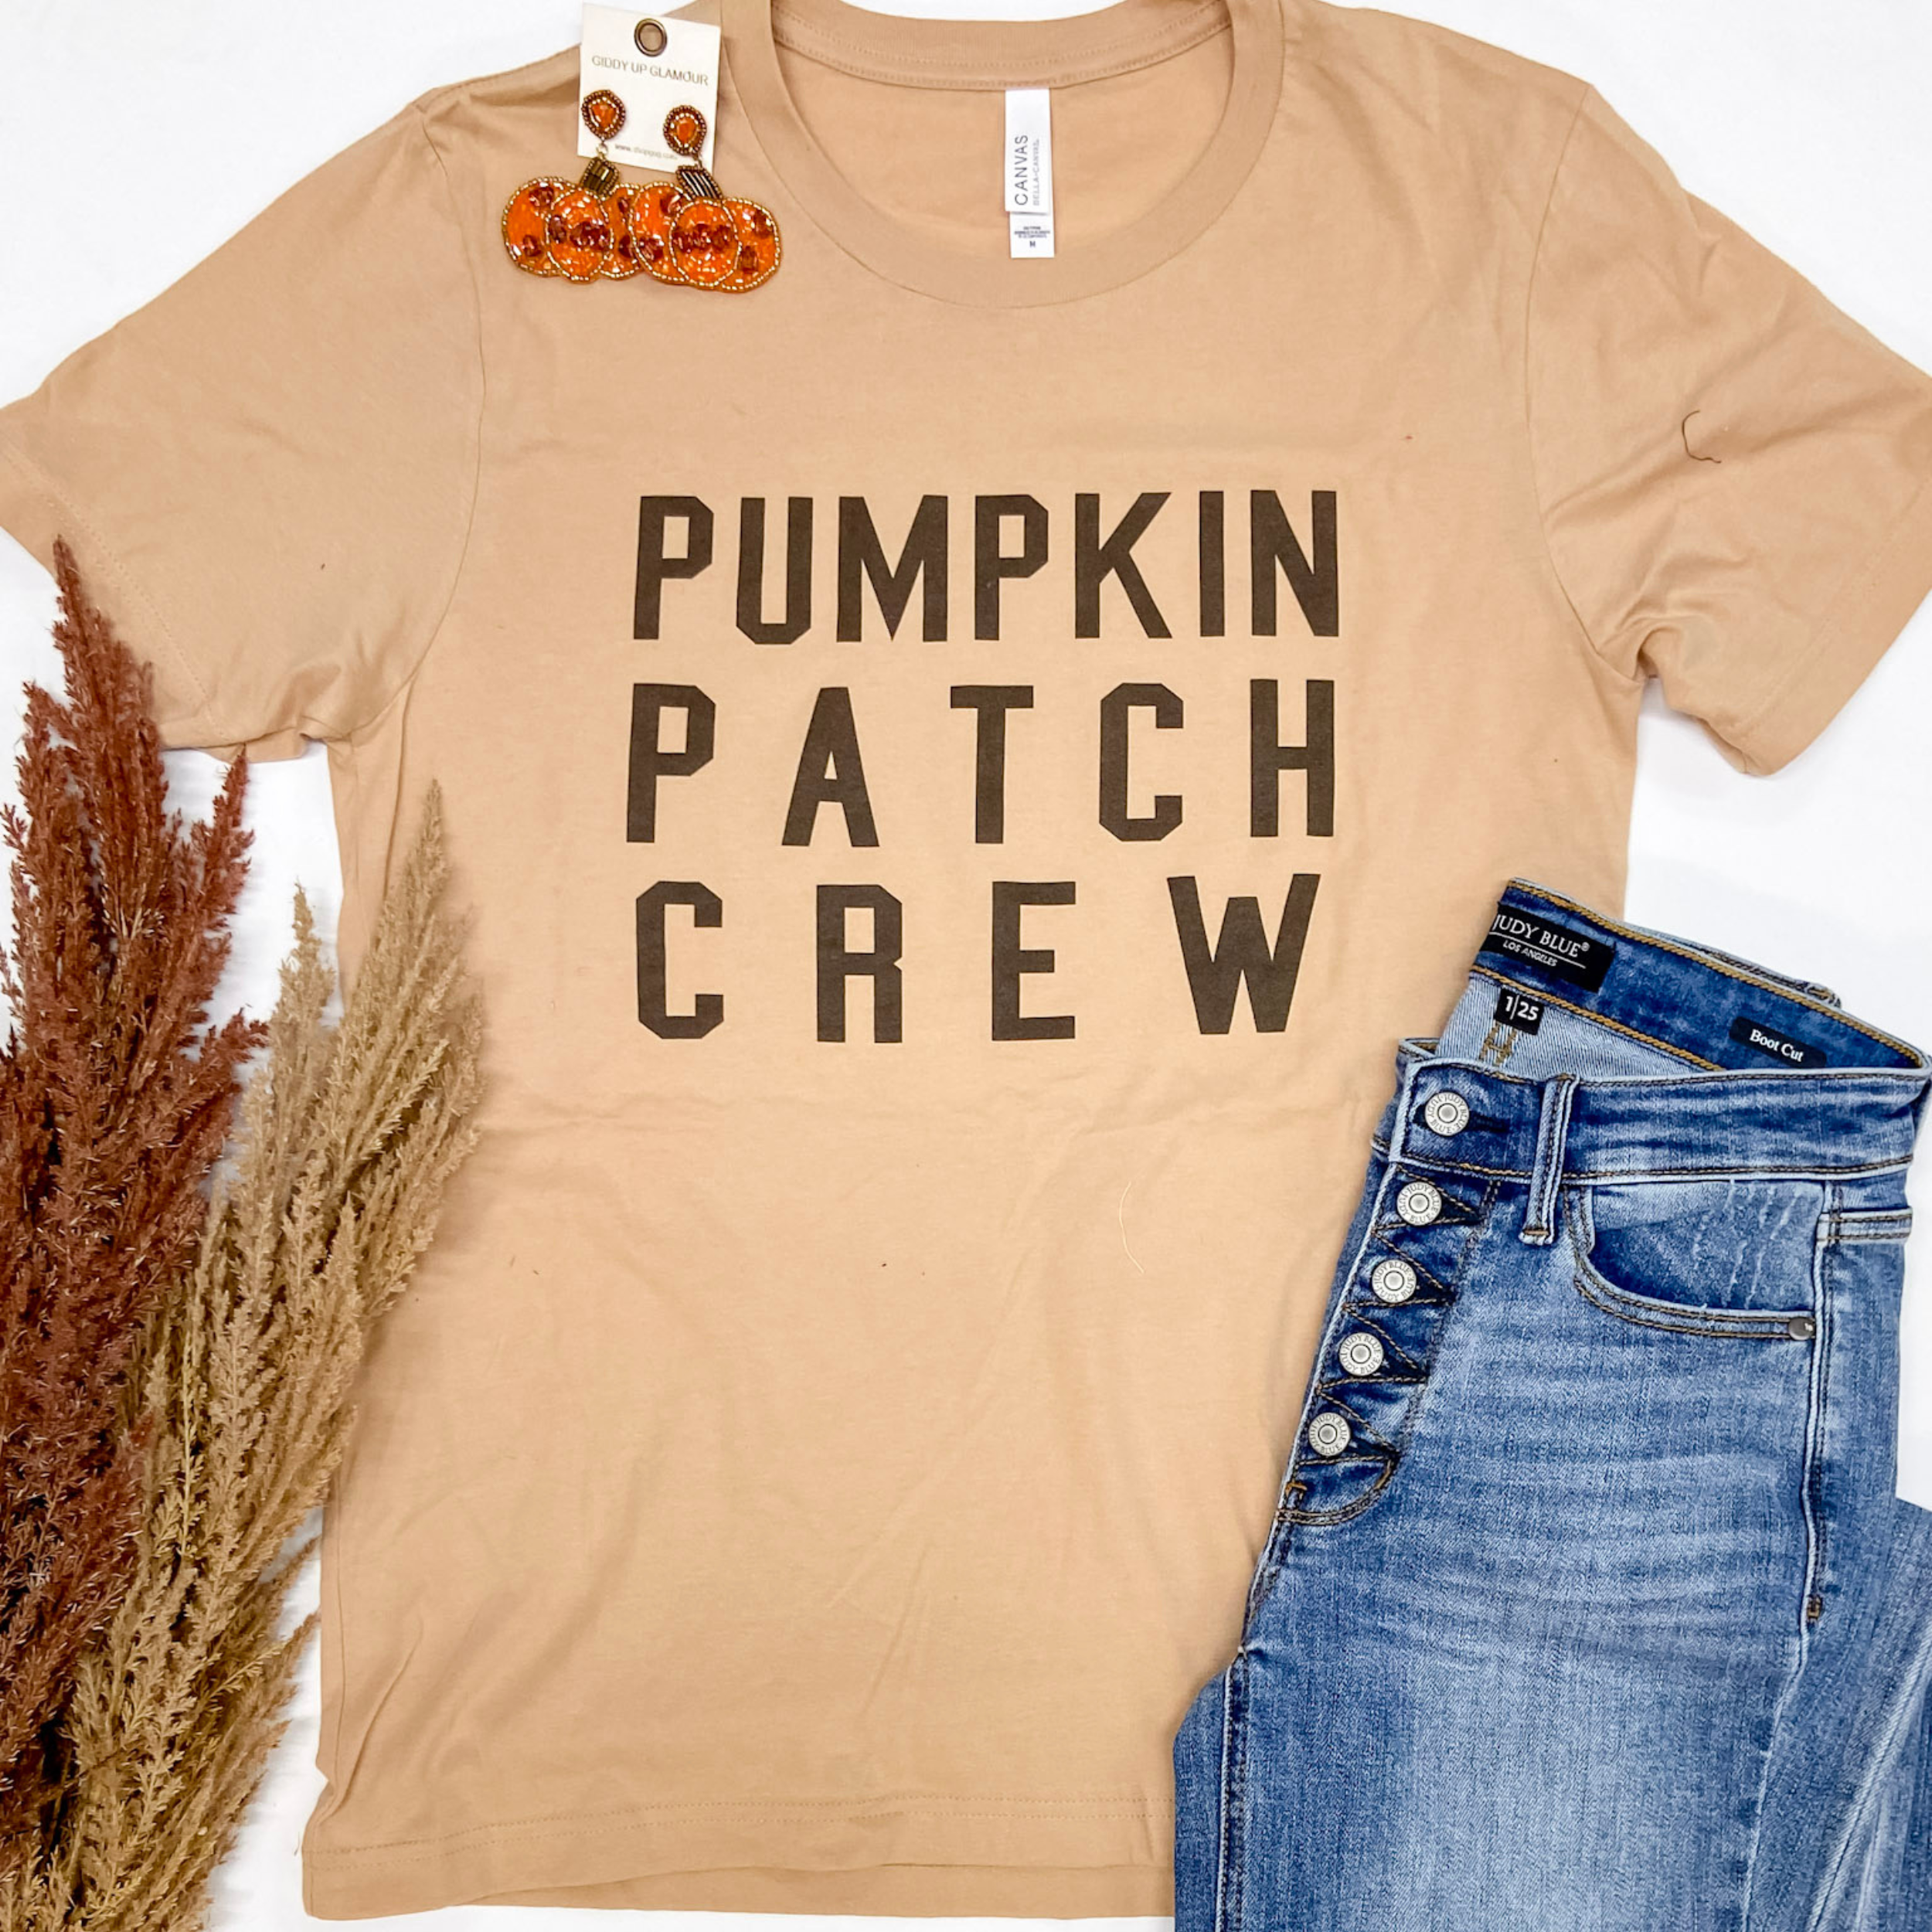 Last Chance Size Medium | Pumpkin Patch Crew Short Sleeve Graphic Tee in Tan